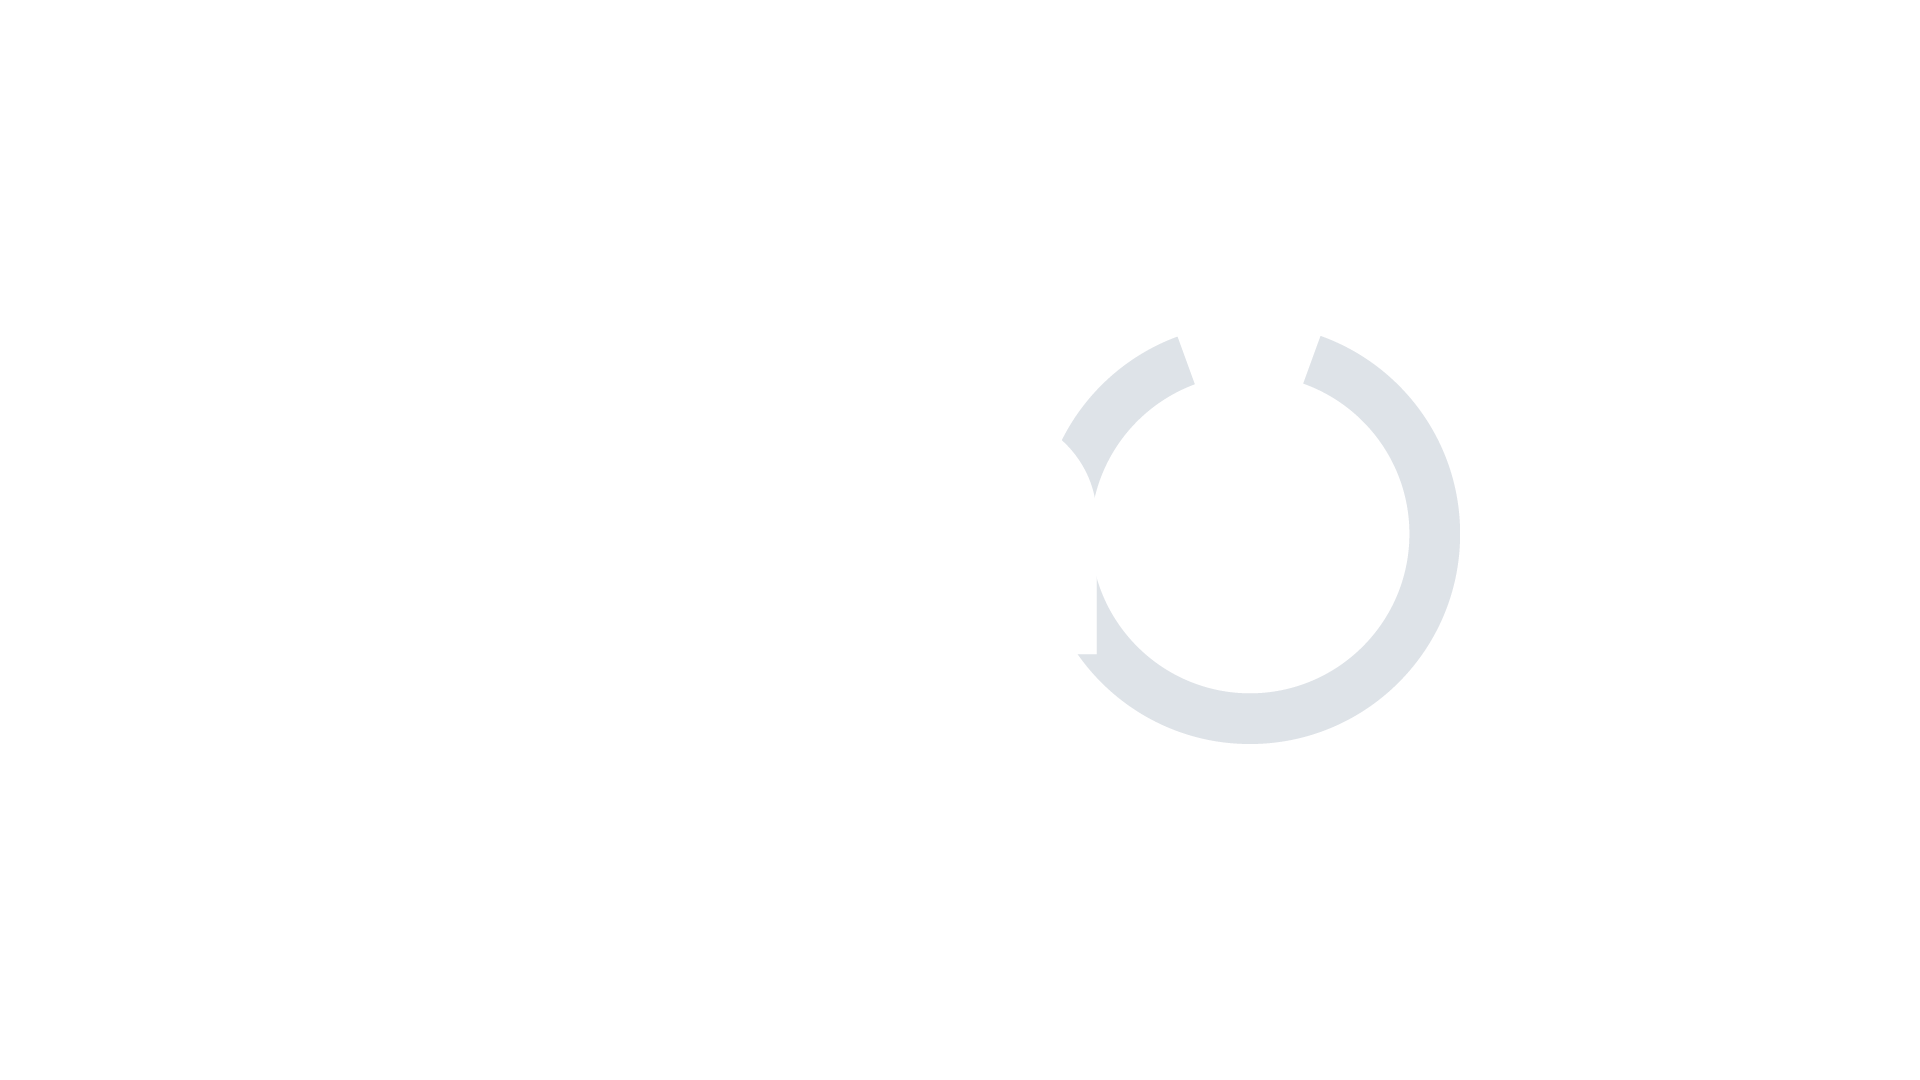 PMC Retail